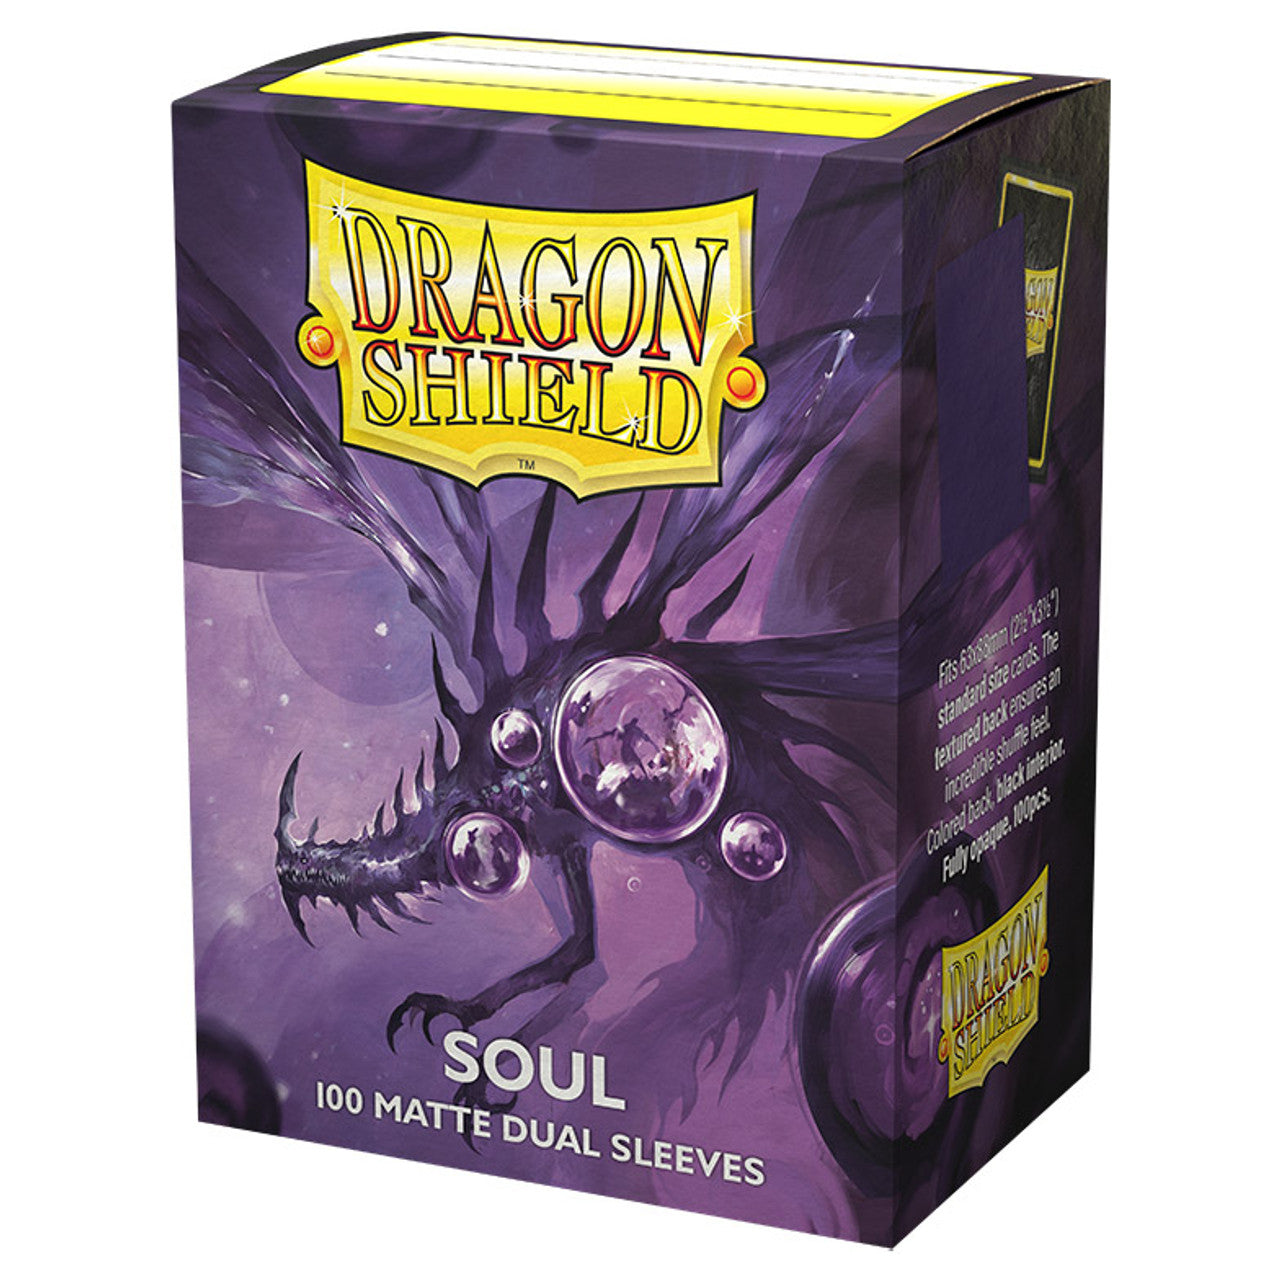 Dragon Shield Sleeve Dual Matte Standard Size 100pcs - Soul-Dragon Shield-Ace Cards & Collectibles